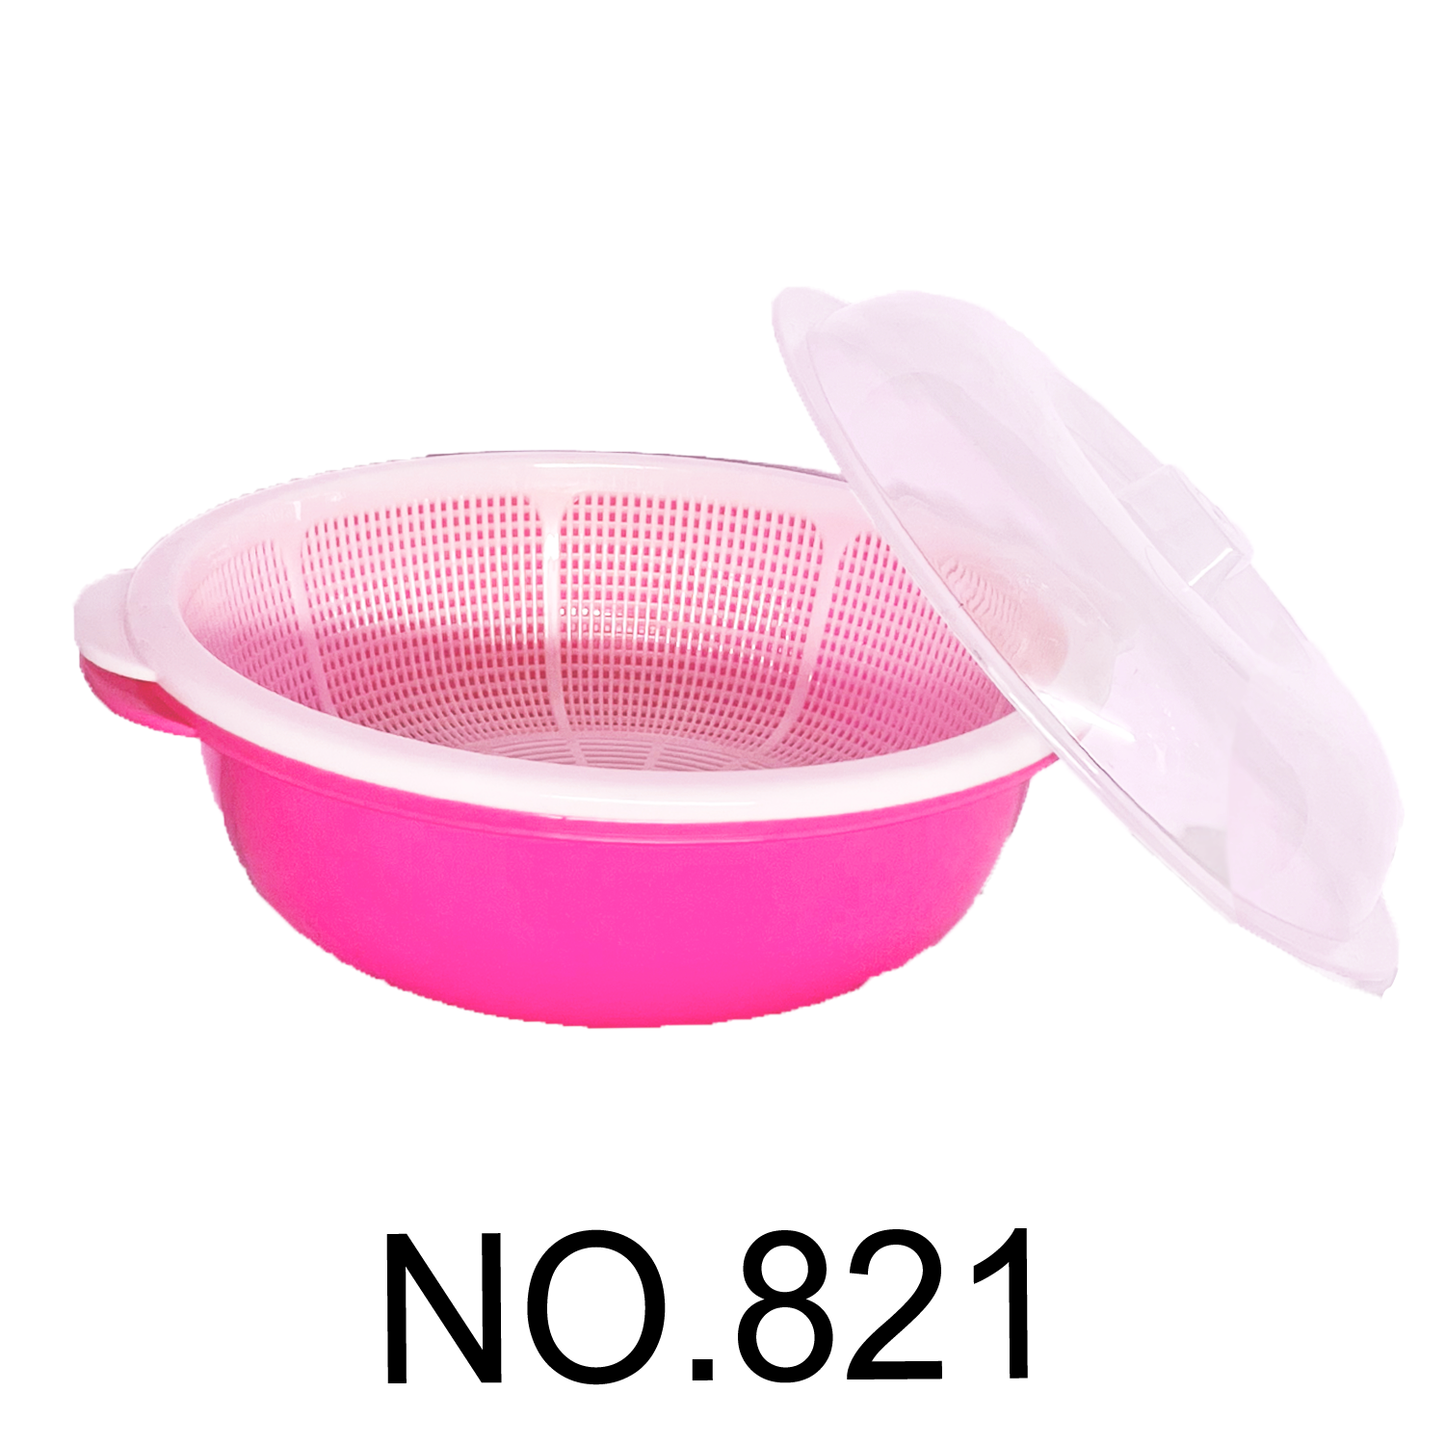 3L Pink Mixing Bowl w/ Lid